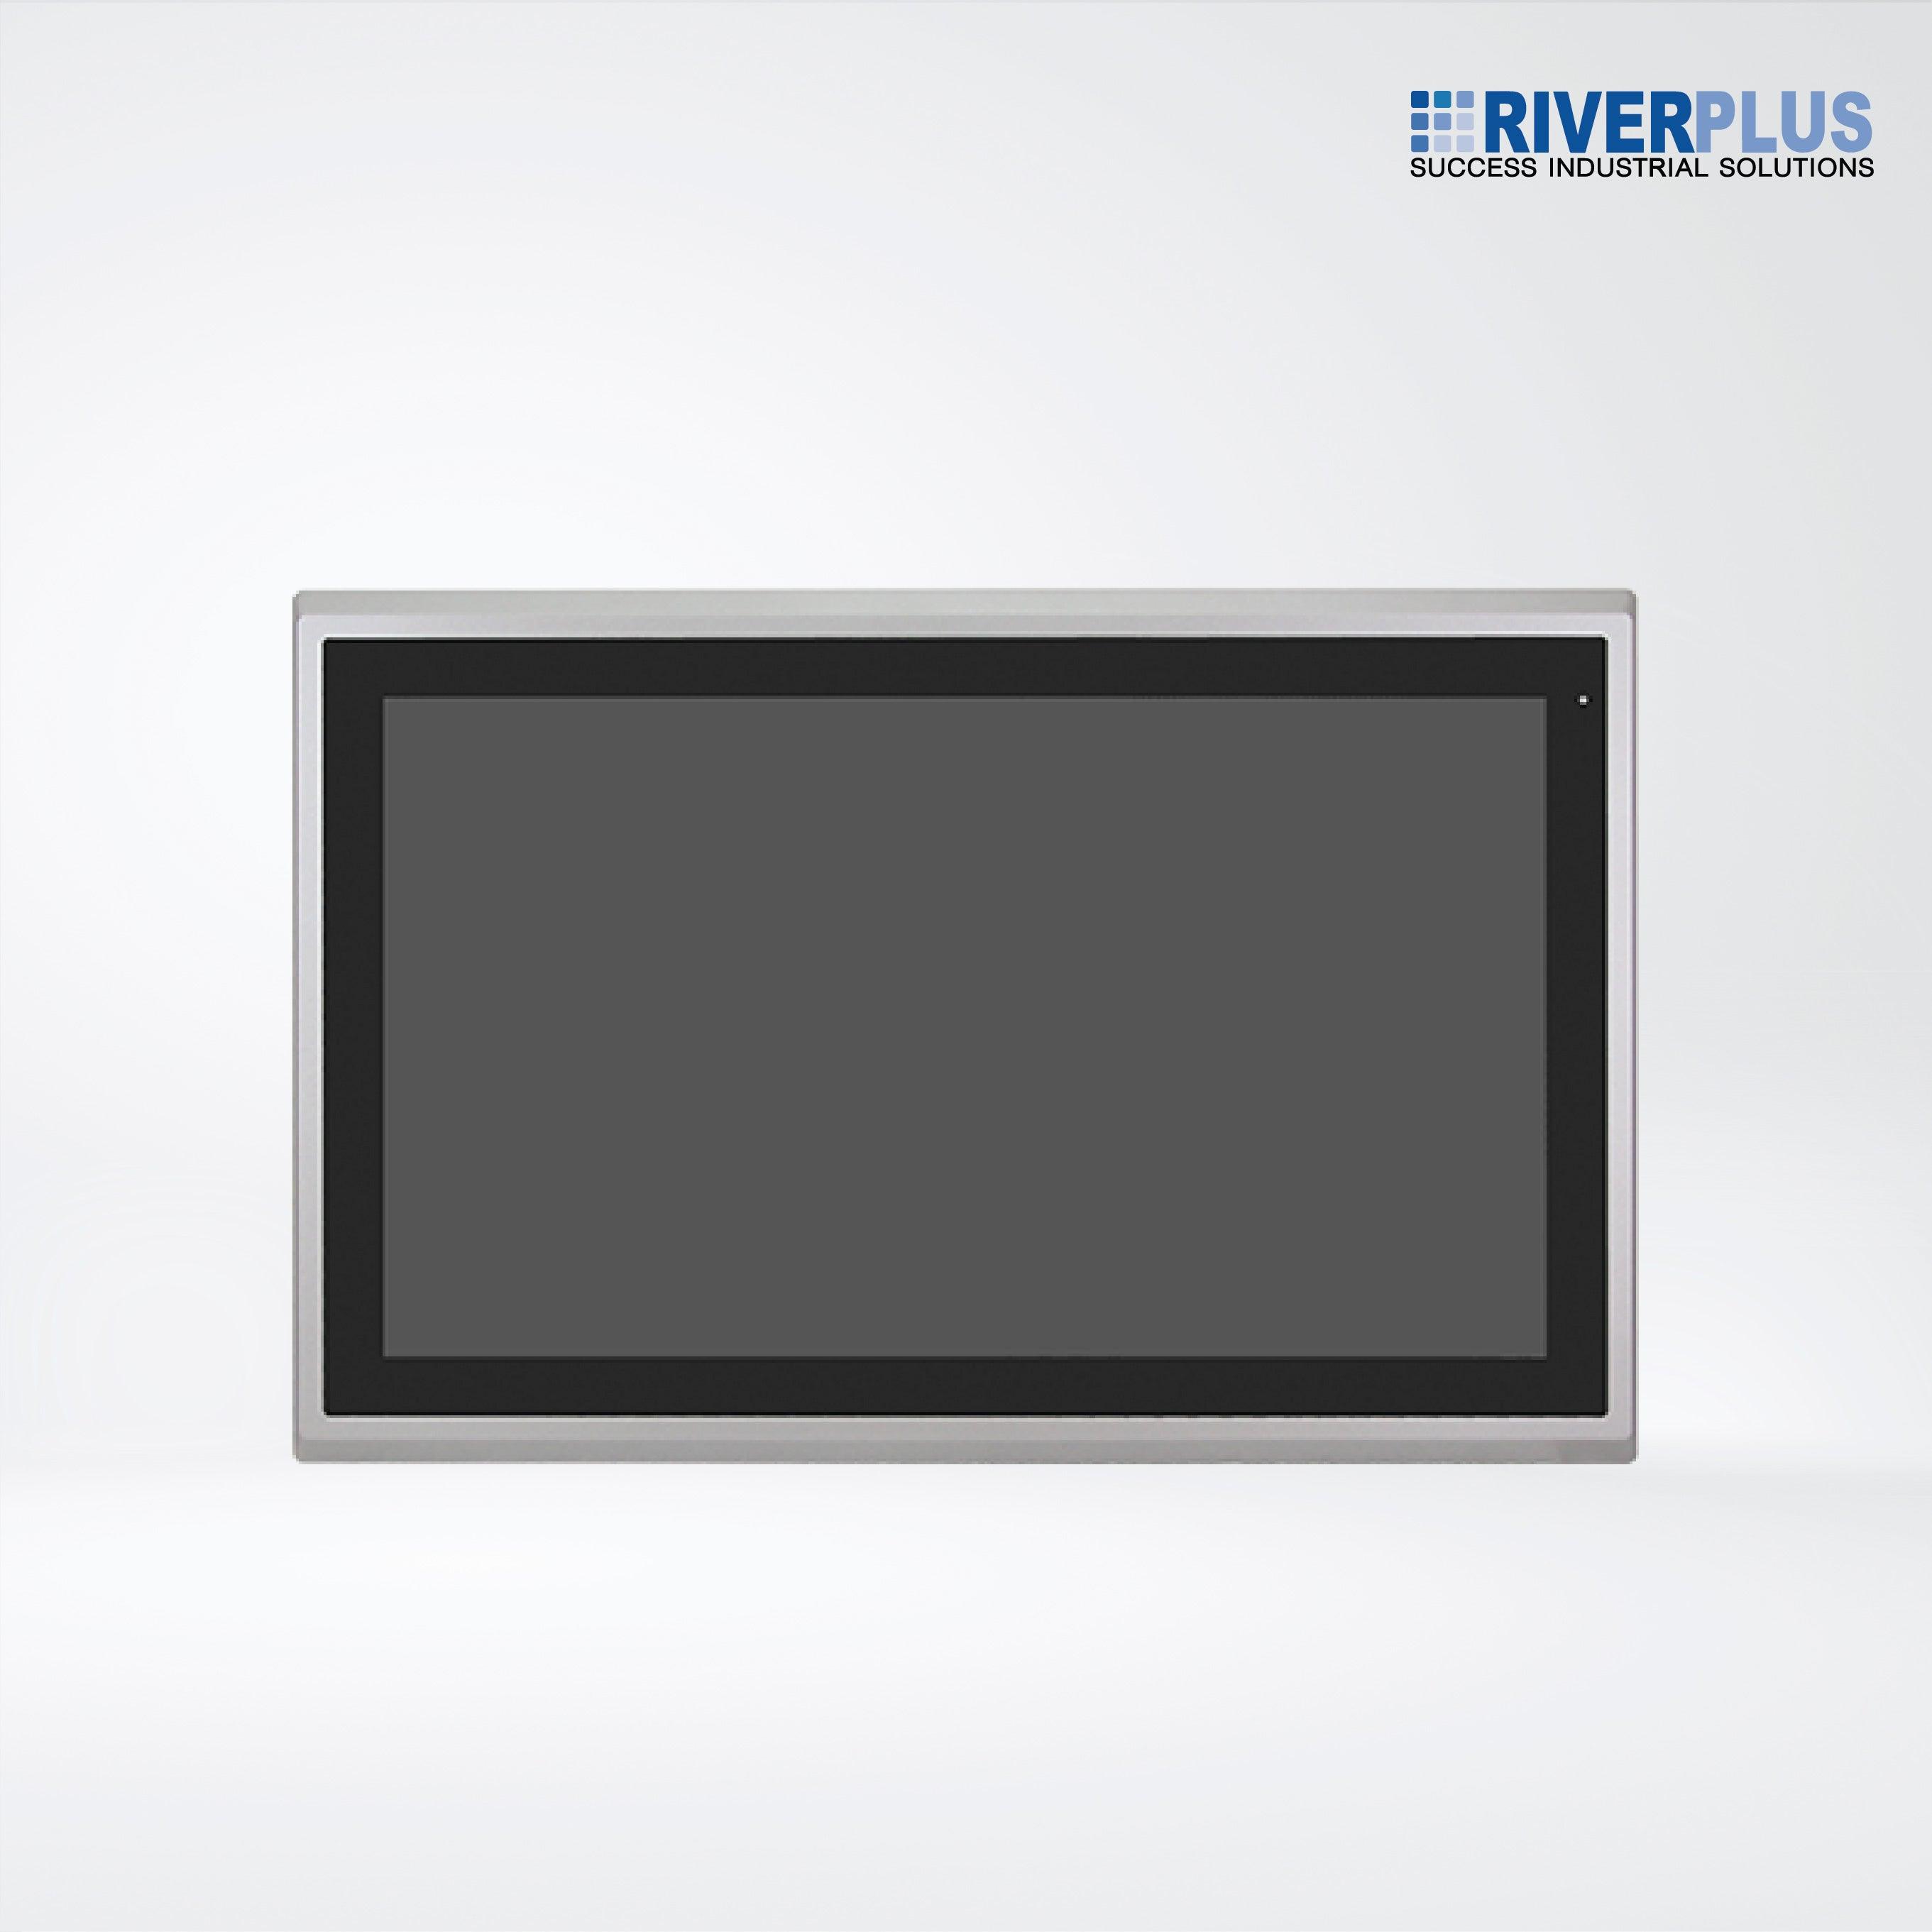 ViPAC-821R 21.5” Intel Celeron N2930 Fanless Expandable Panel PC - Riverplus